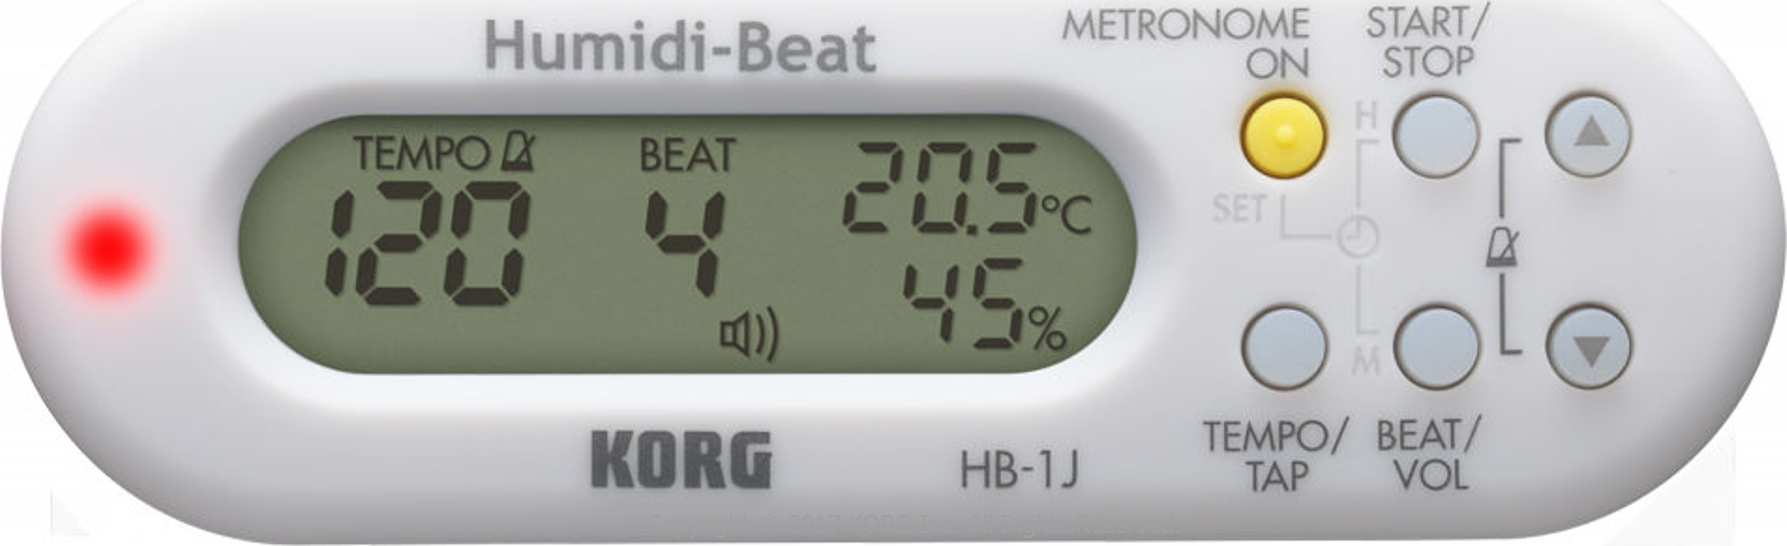 Korg Humidi-beat Metronome With Humidity Temperature Detector White - Afinador de guitarra - Main picture